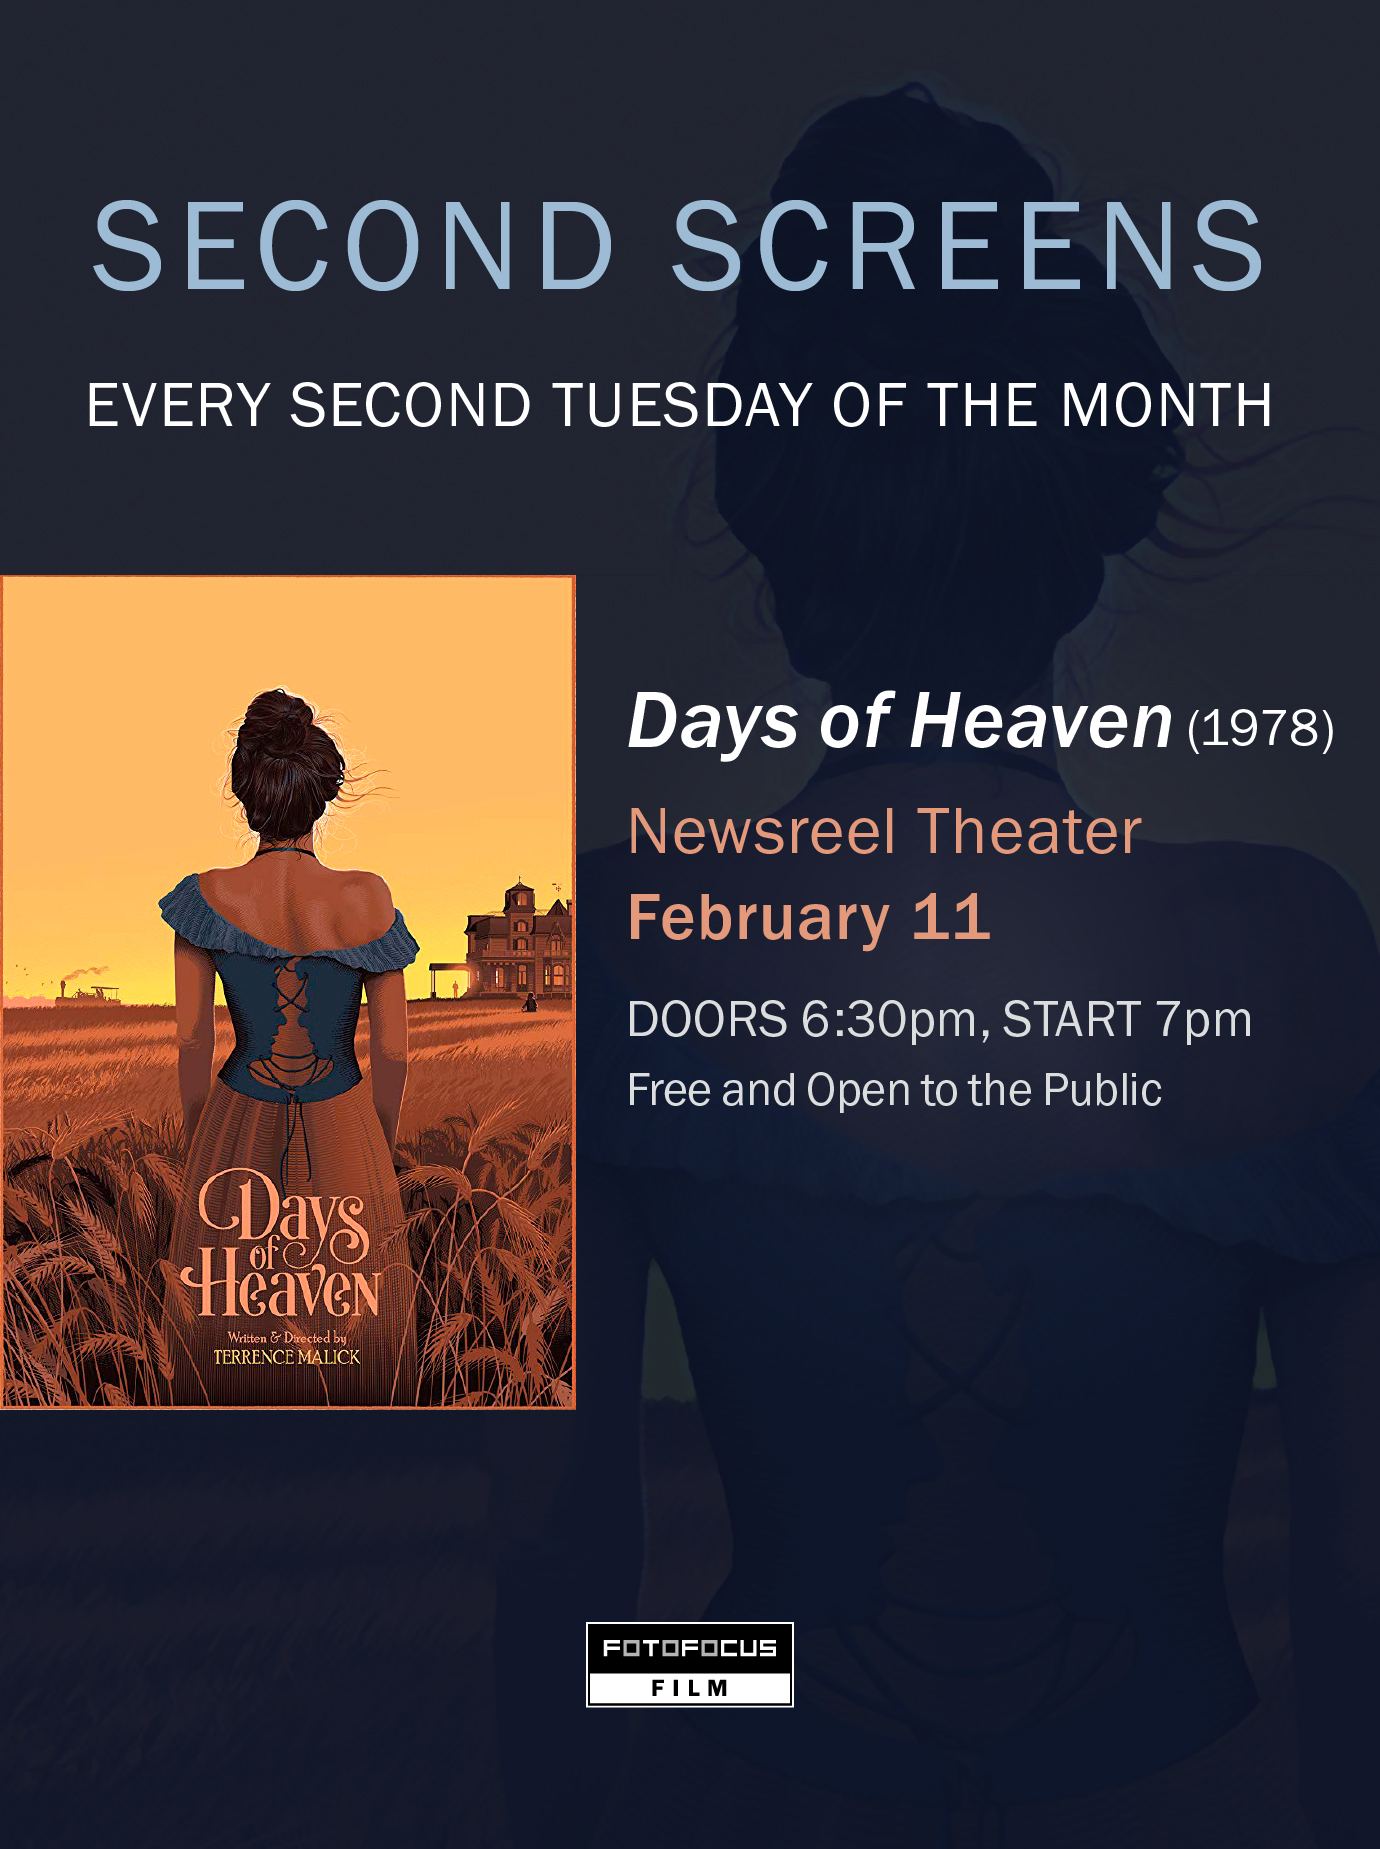 Second Screens February Screening